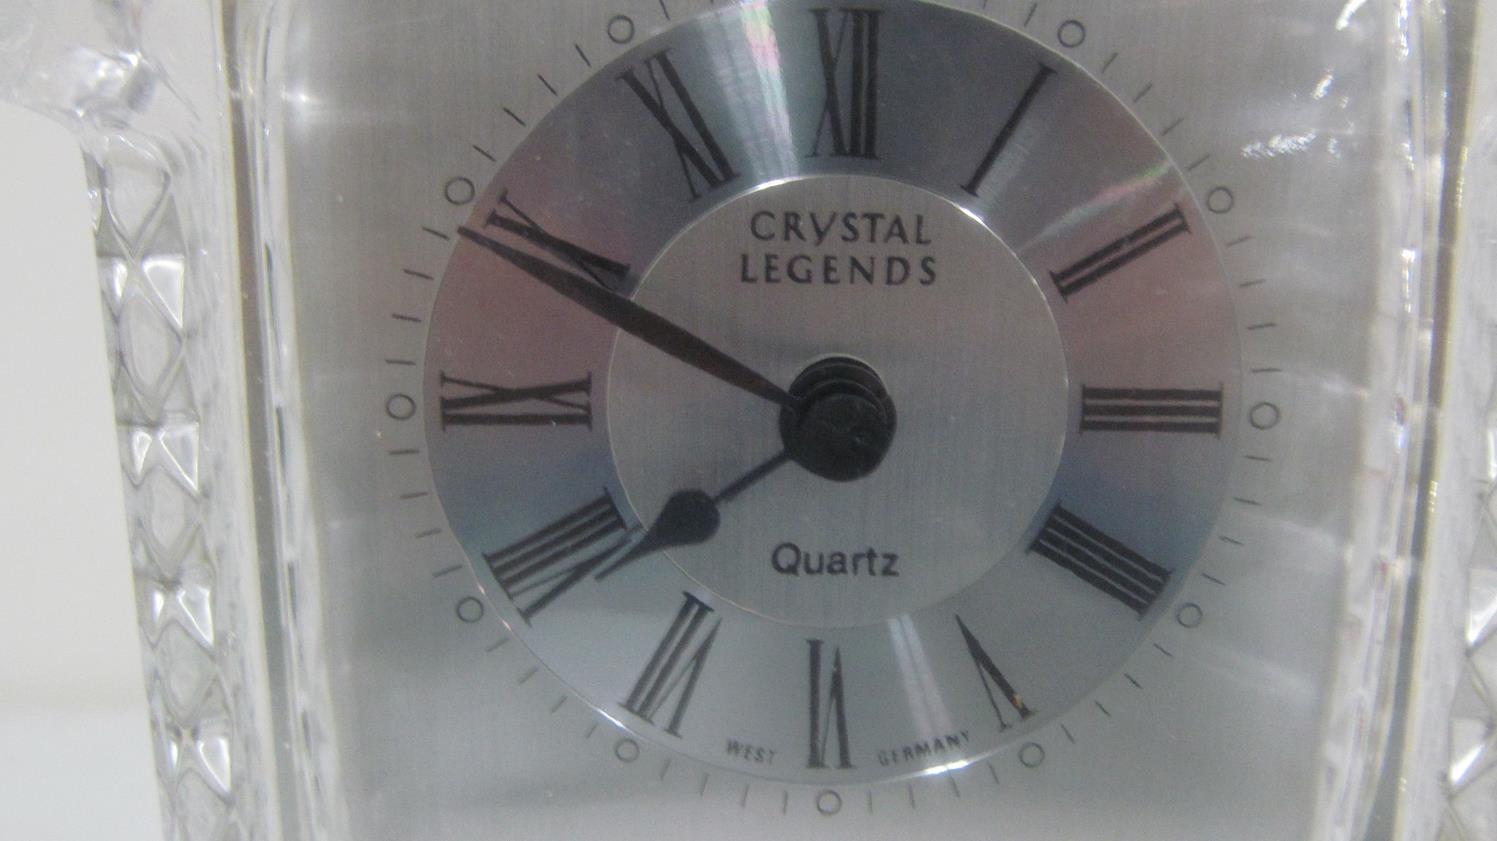 Crystal Legends 10.75" quartz clock made in West Germany